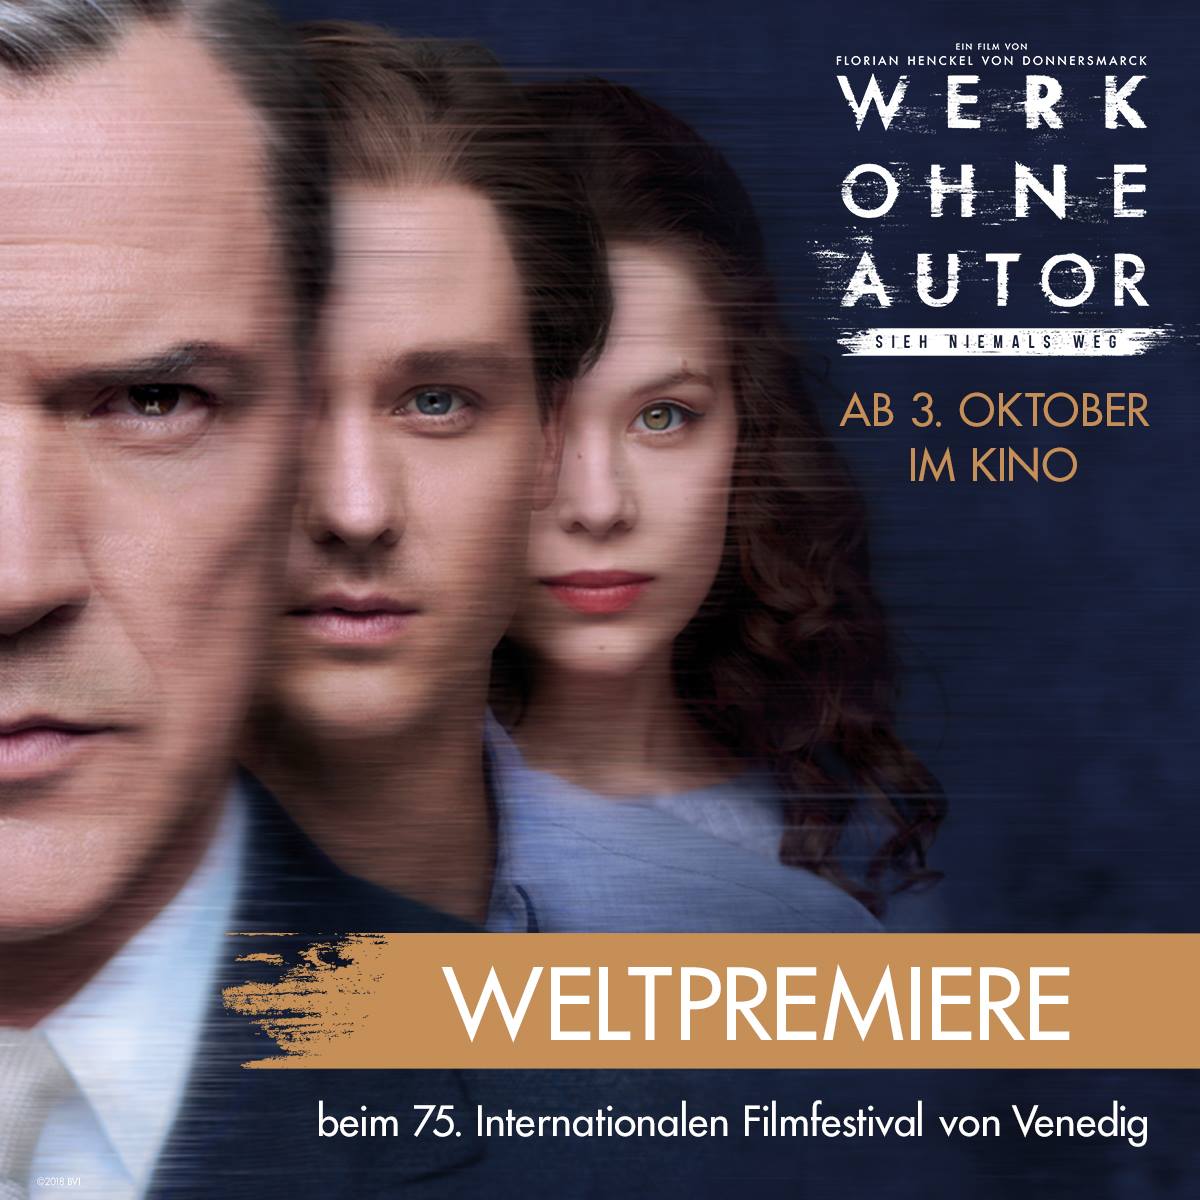 "Werk ohne Author" premiere in Venice Film FEstival